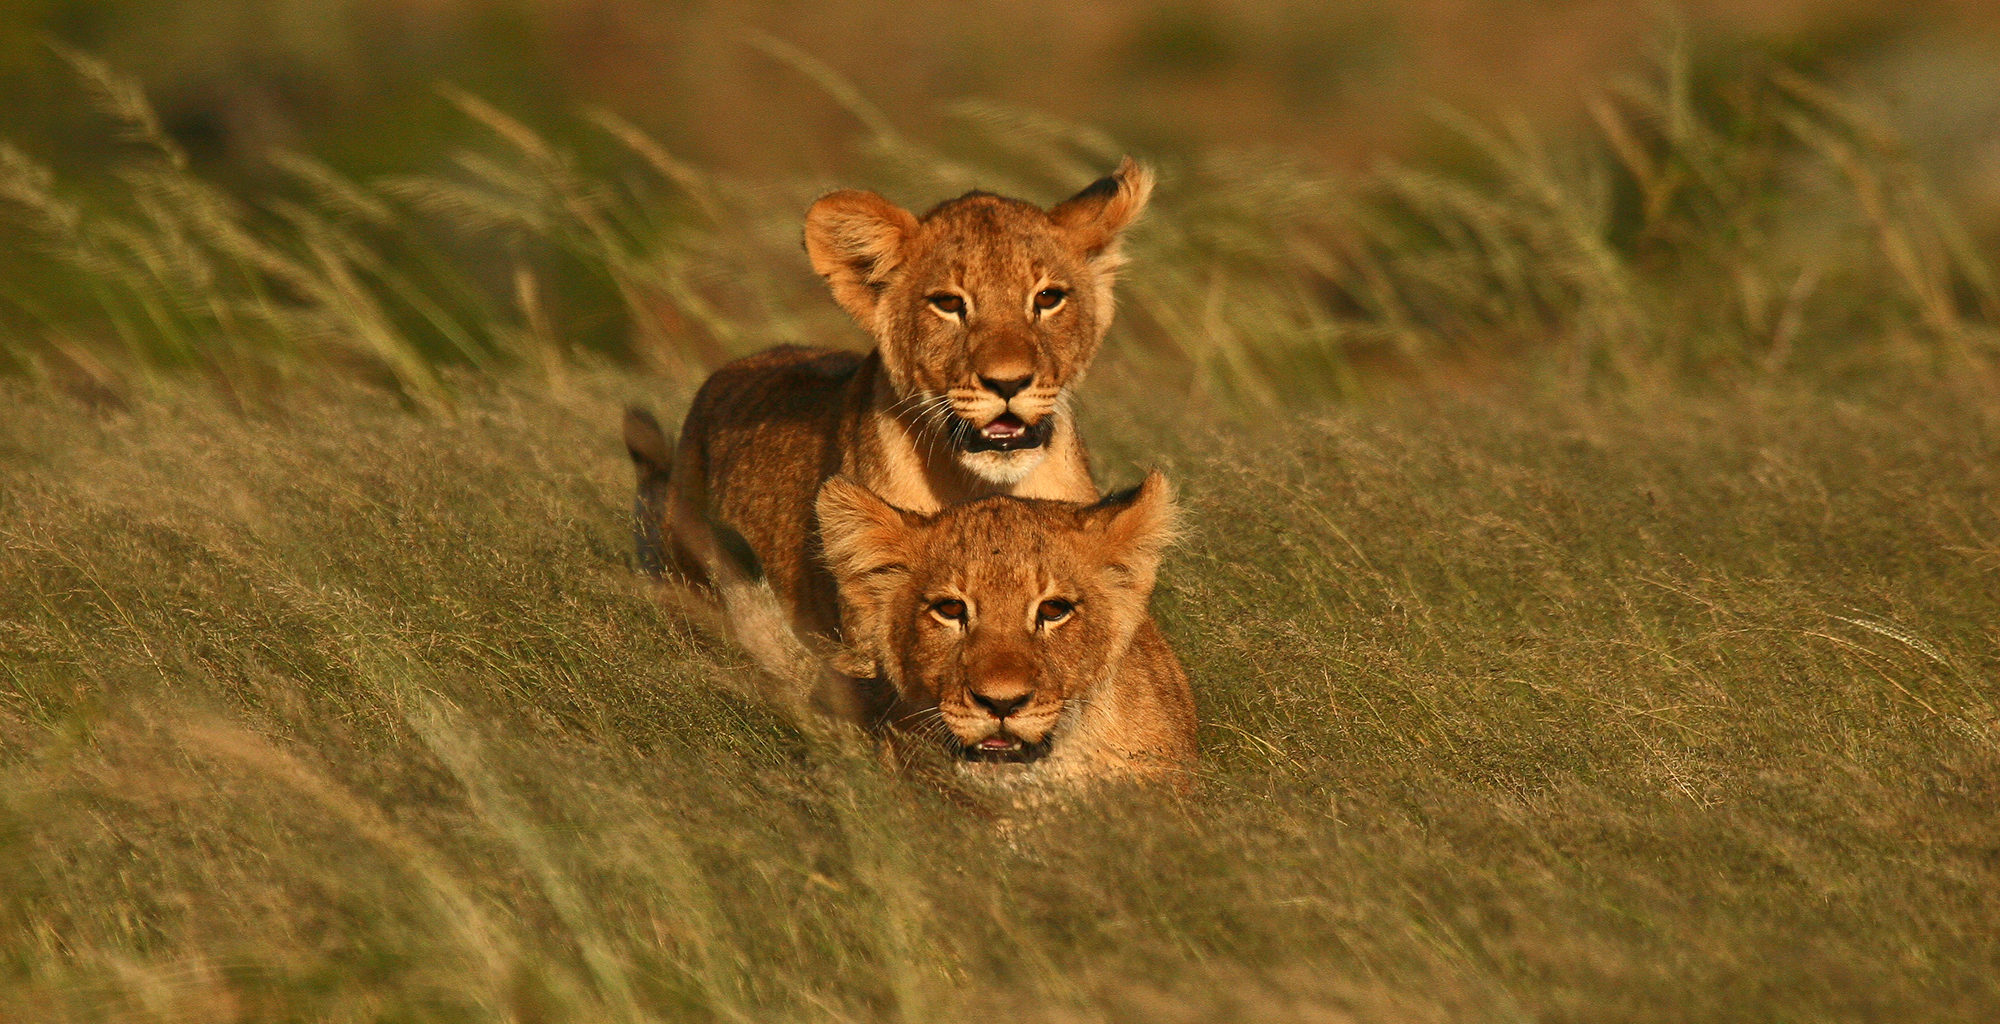 South-Africa-Kwandwe-Lion